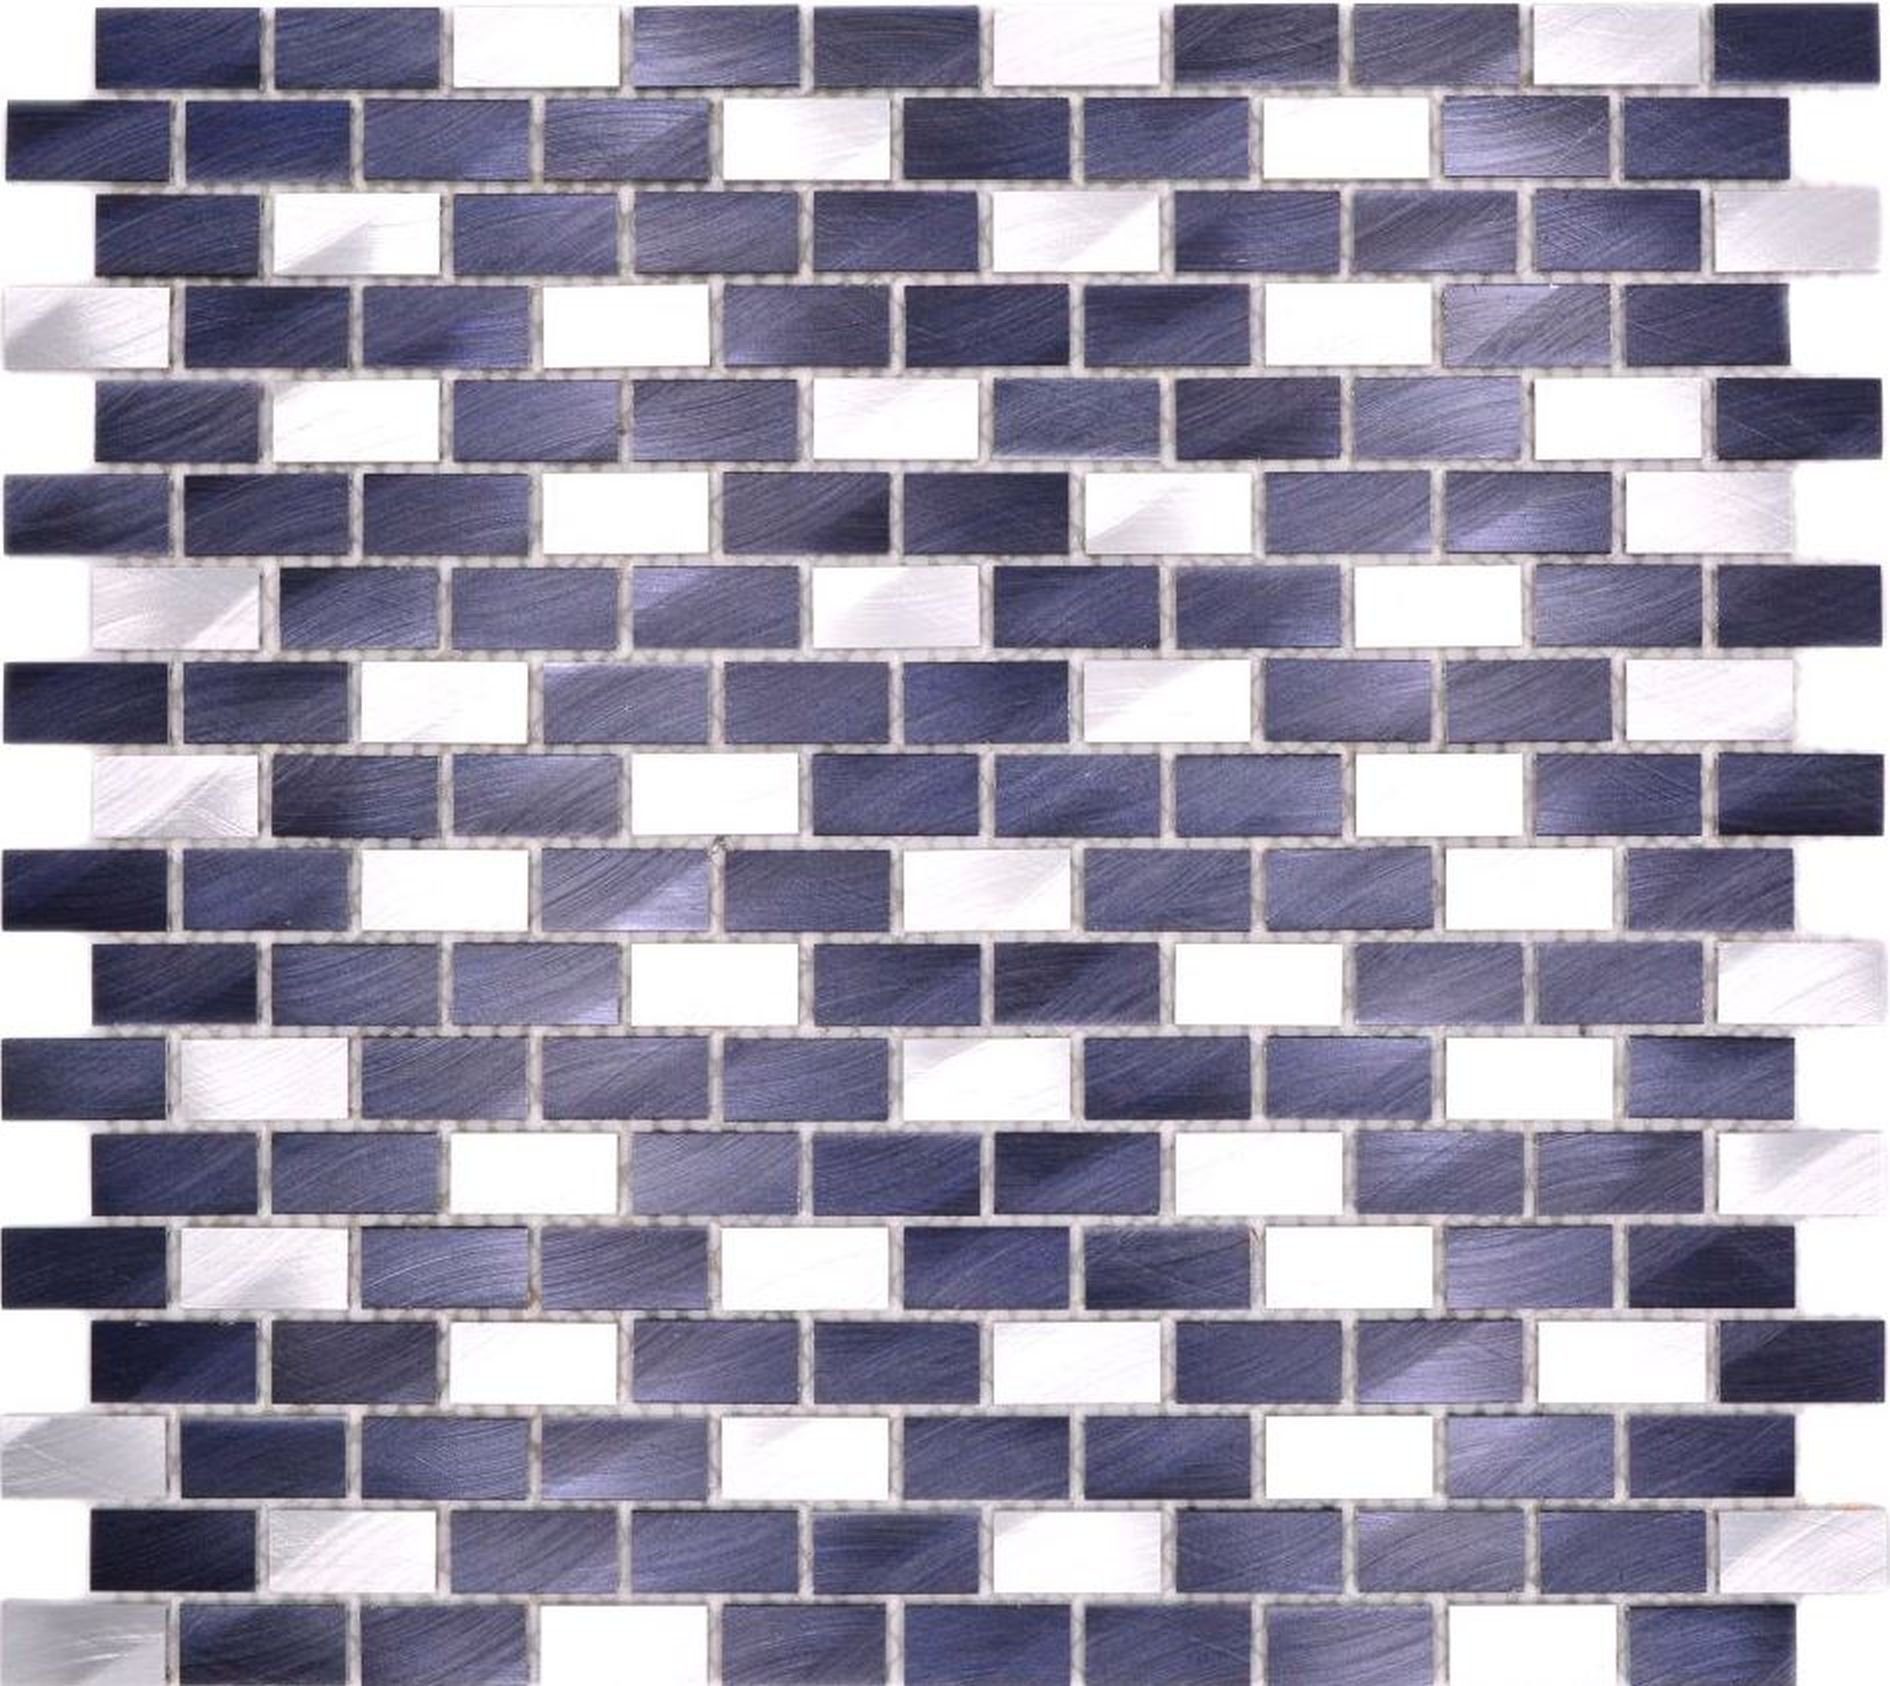 Mosani Mosaikfliesen Mosaik Fliese Aluminium Brick schwarz Fliesenspiegel Küchenwand | Fliesen